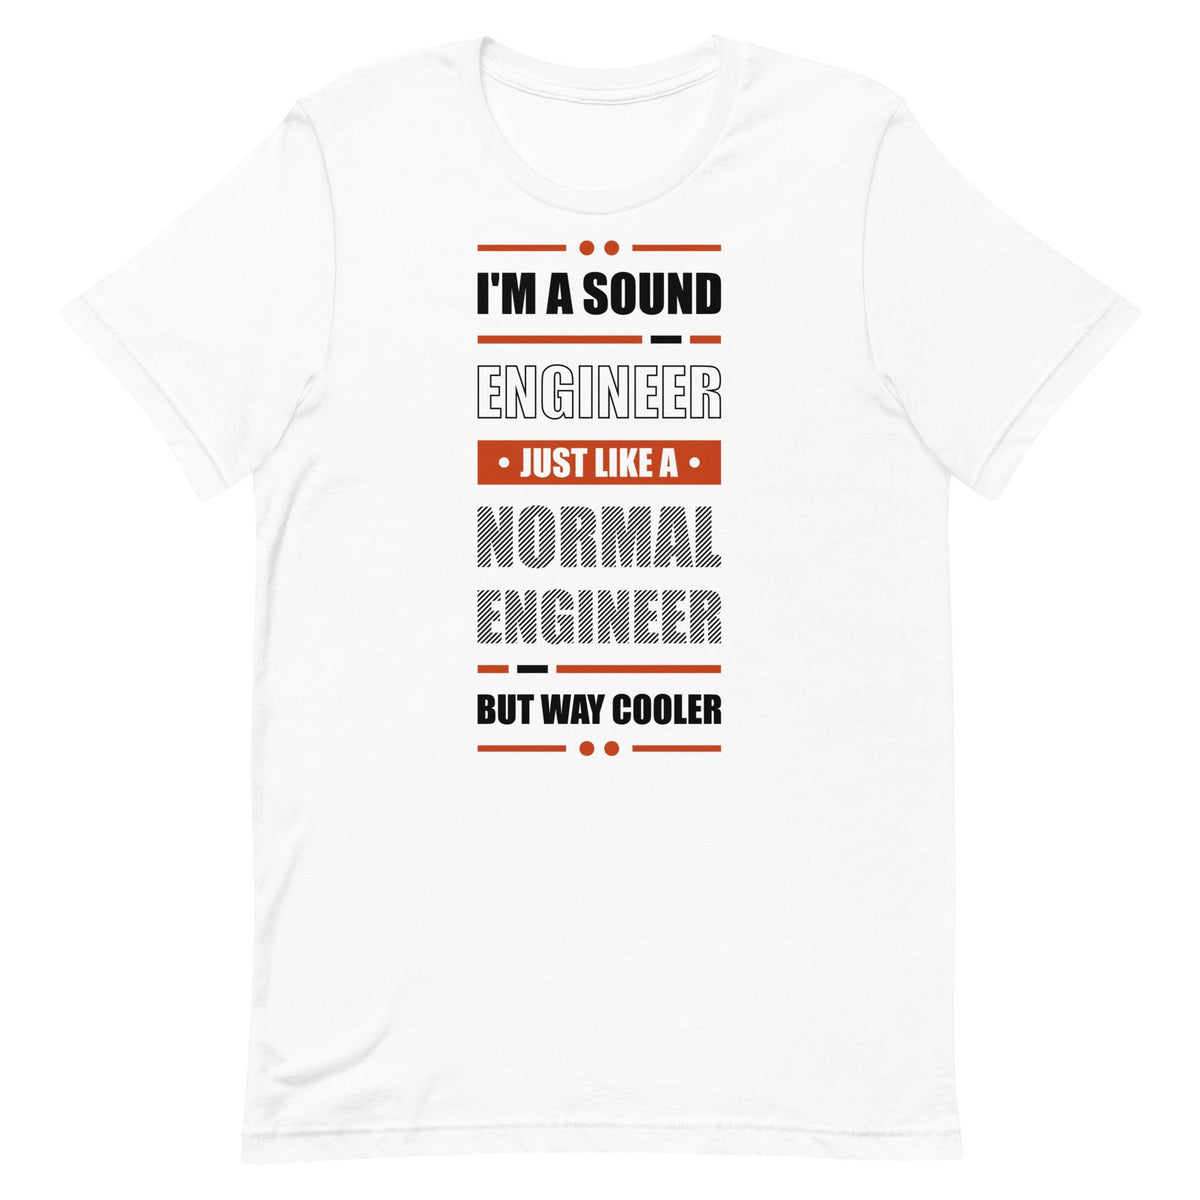 Sound Engineer Like Normal Engineer, But Cooler T-Shirt - Tedeschi Studio, LLC.